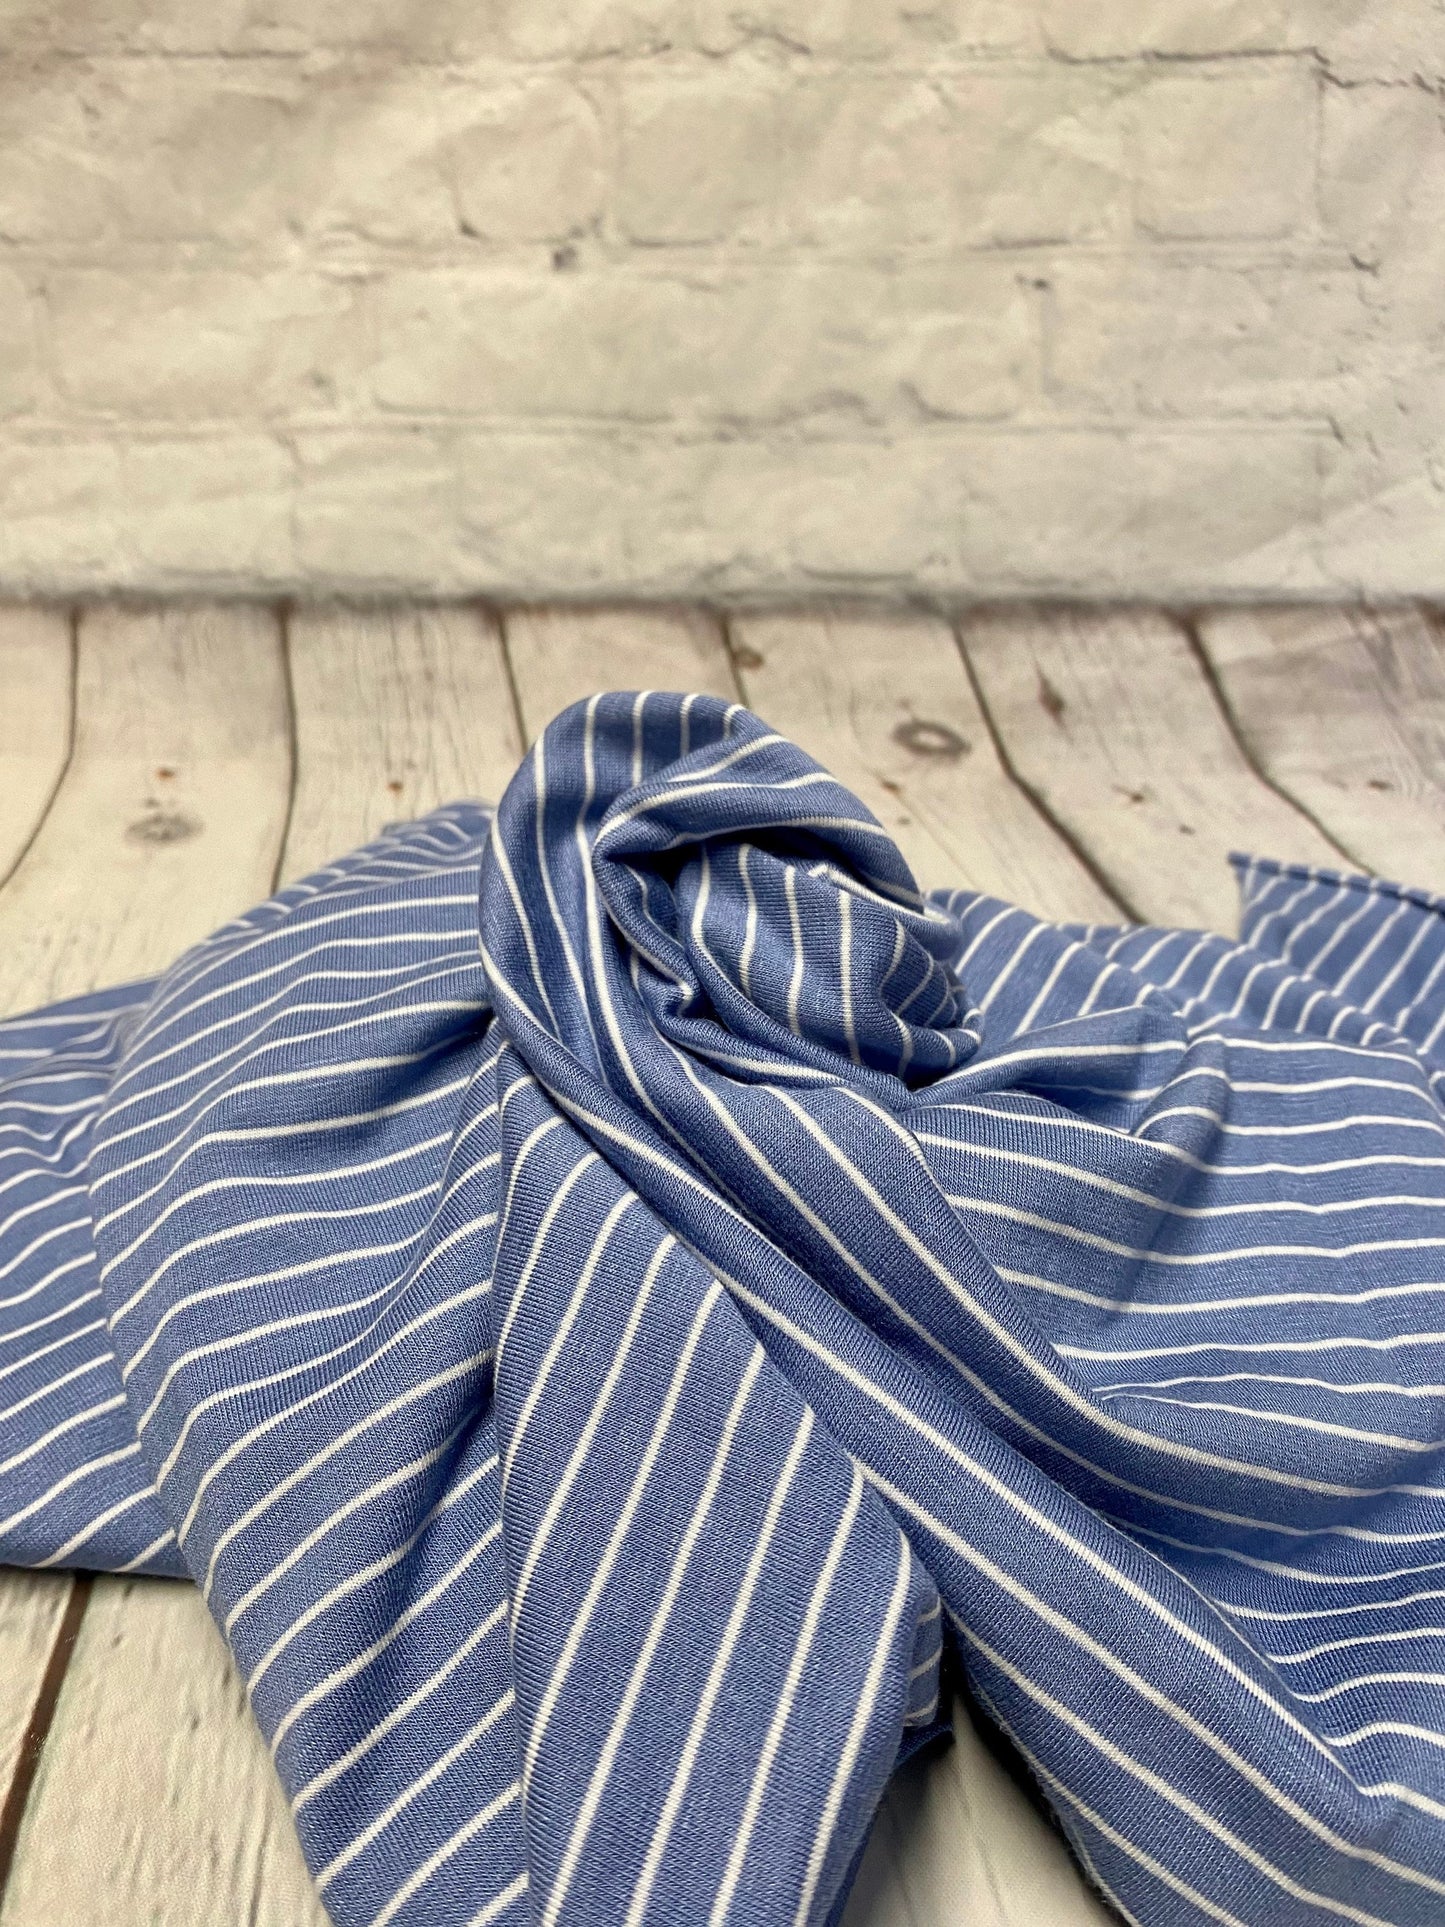 Rayon Spandex Jersey Knit Thin Stripe Fabric By The Yard